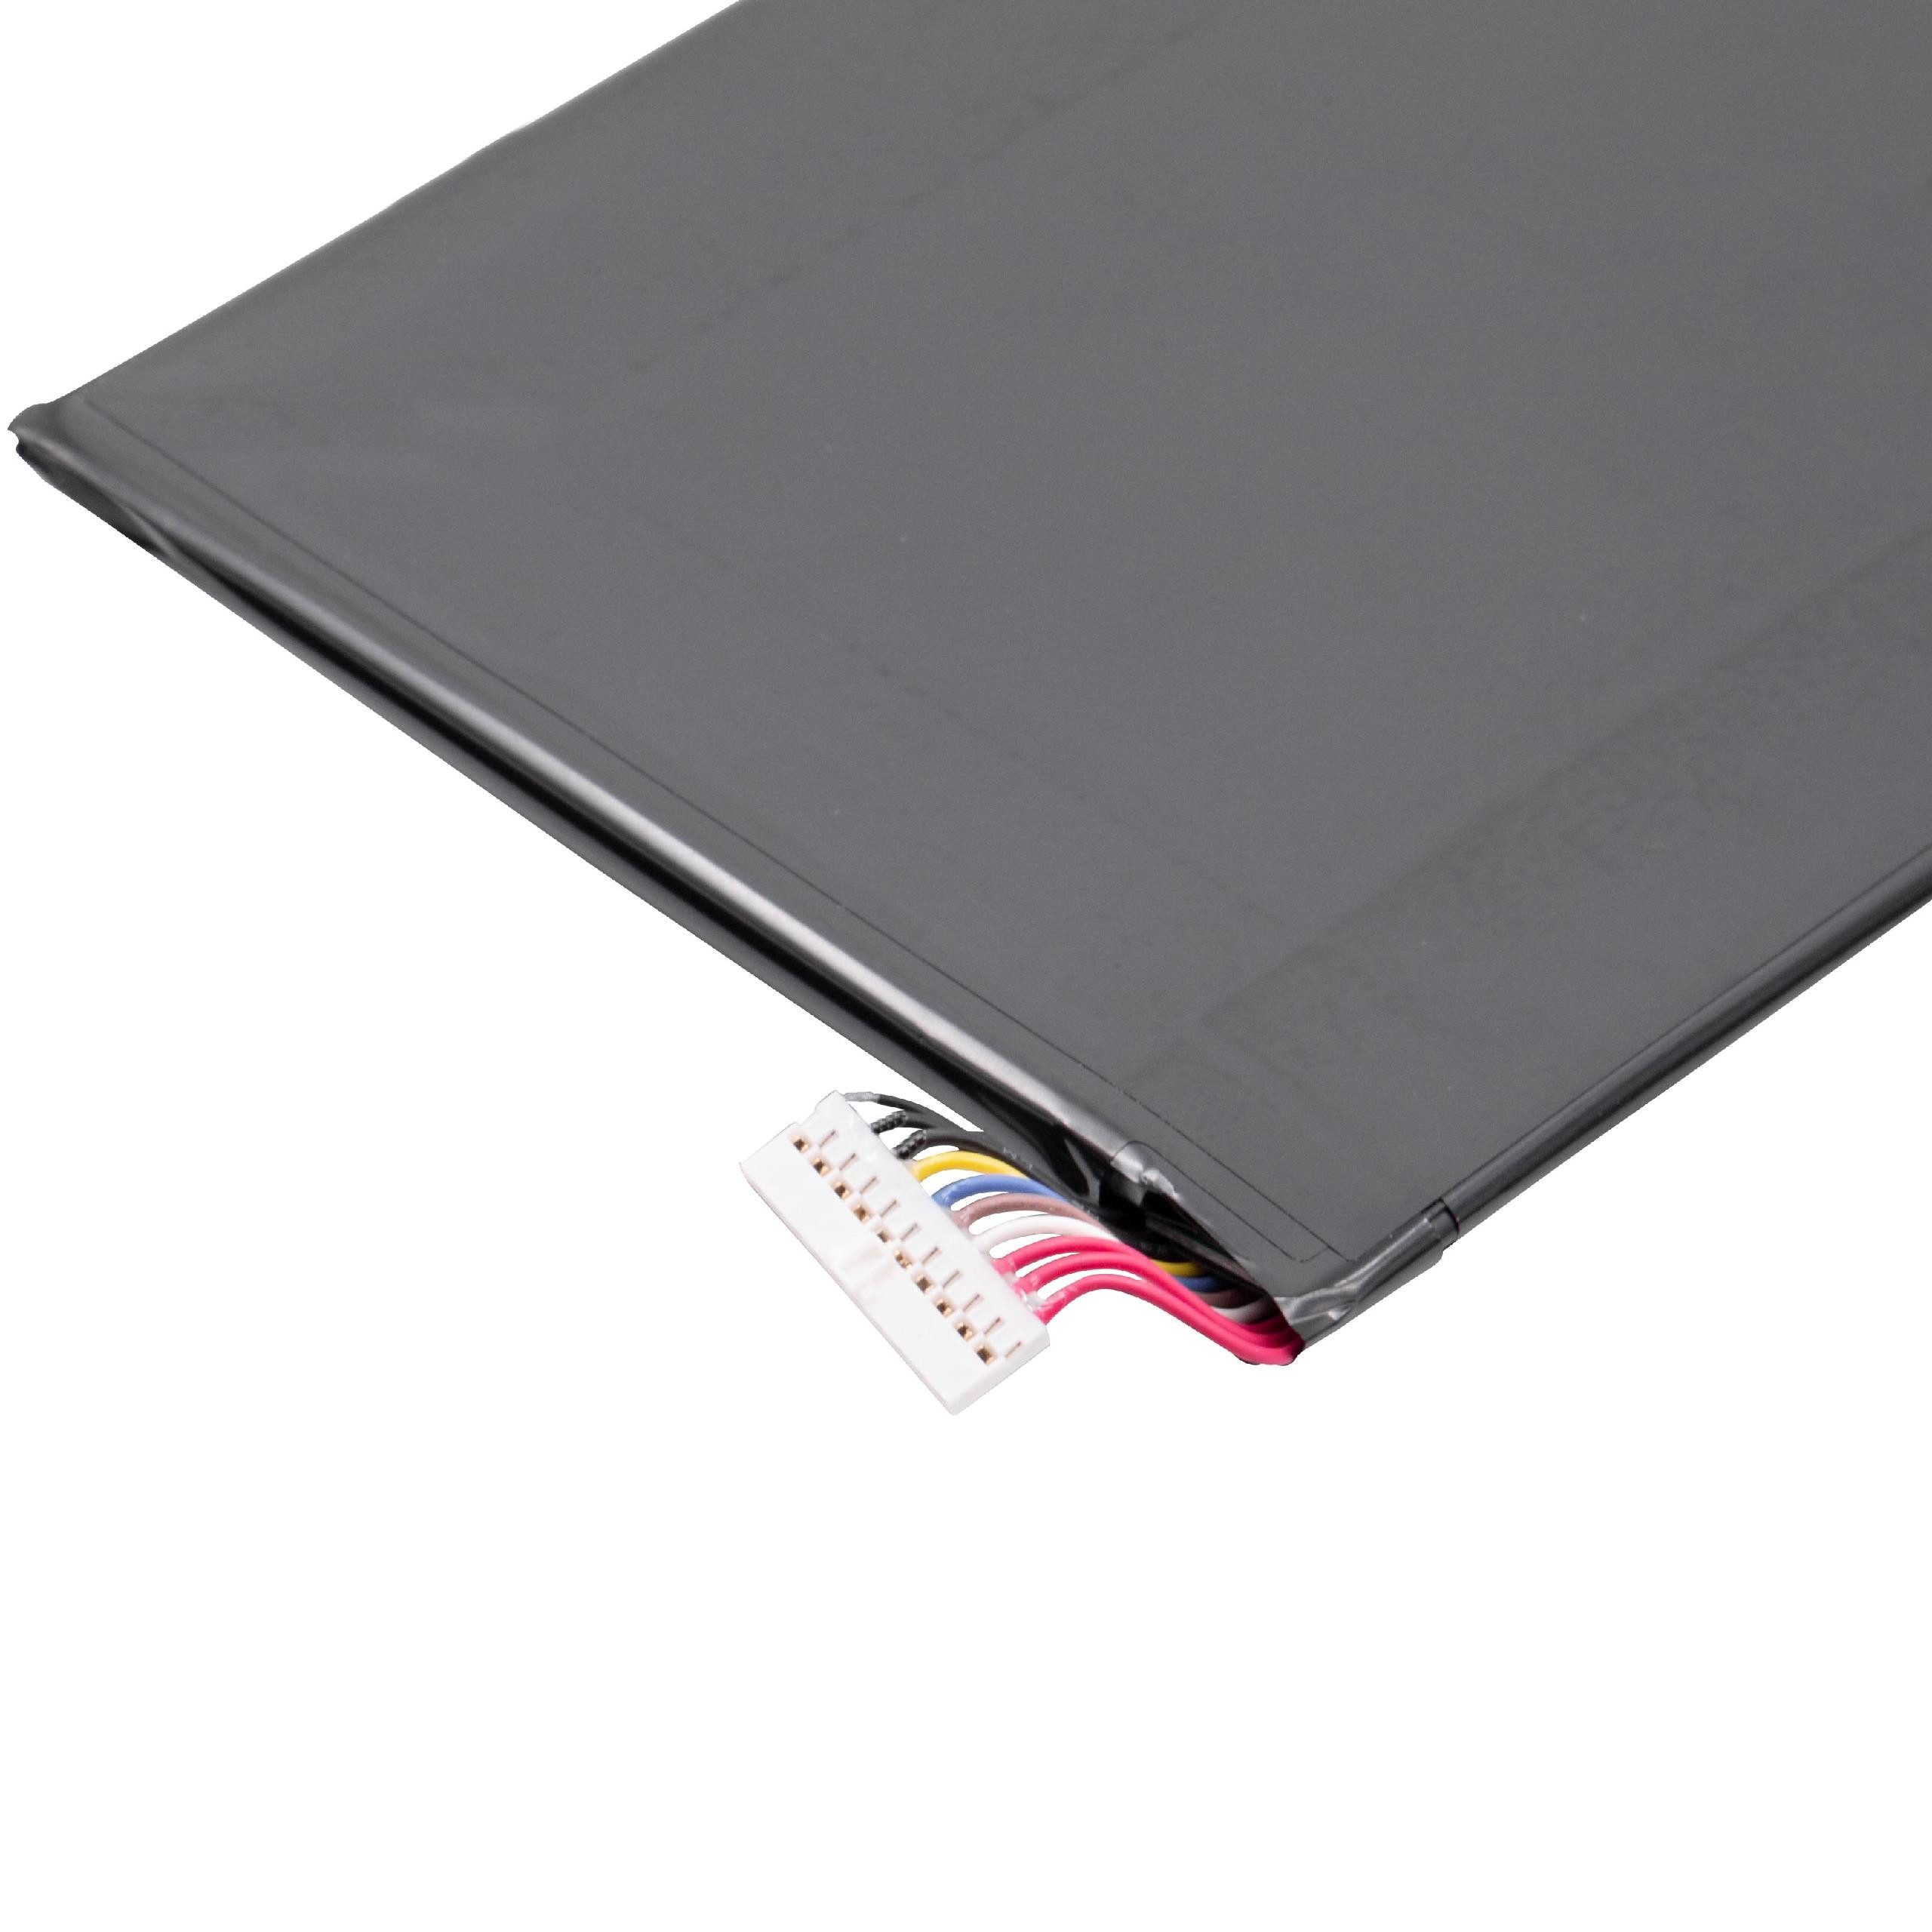 GS73VR Notebook GS73VR 7RF-284CN, Laptop-Akku Notebook vhbw mAh 7RG-035CN / MSI passend für 5700